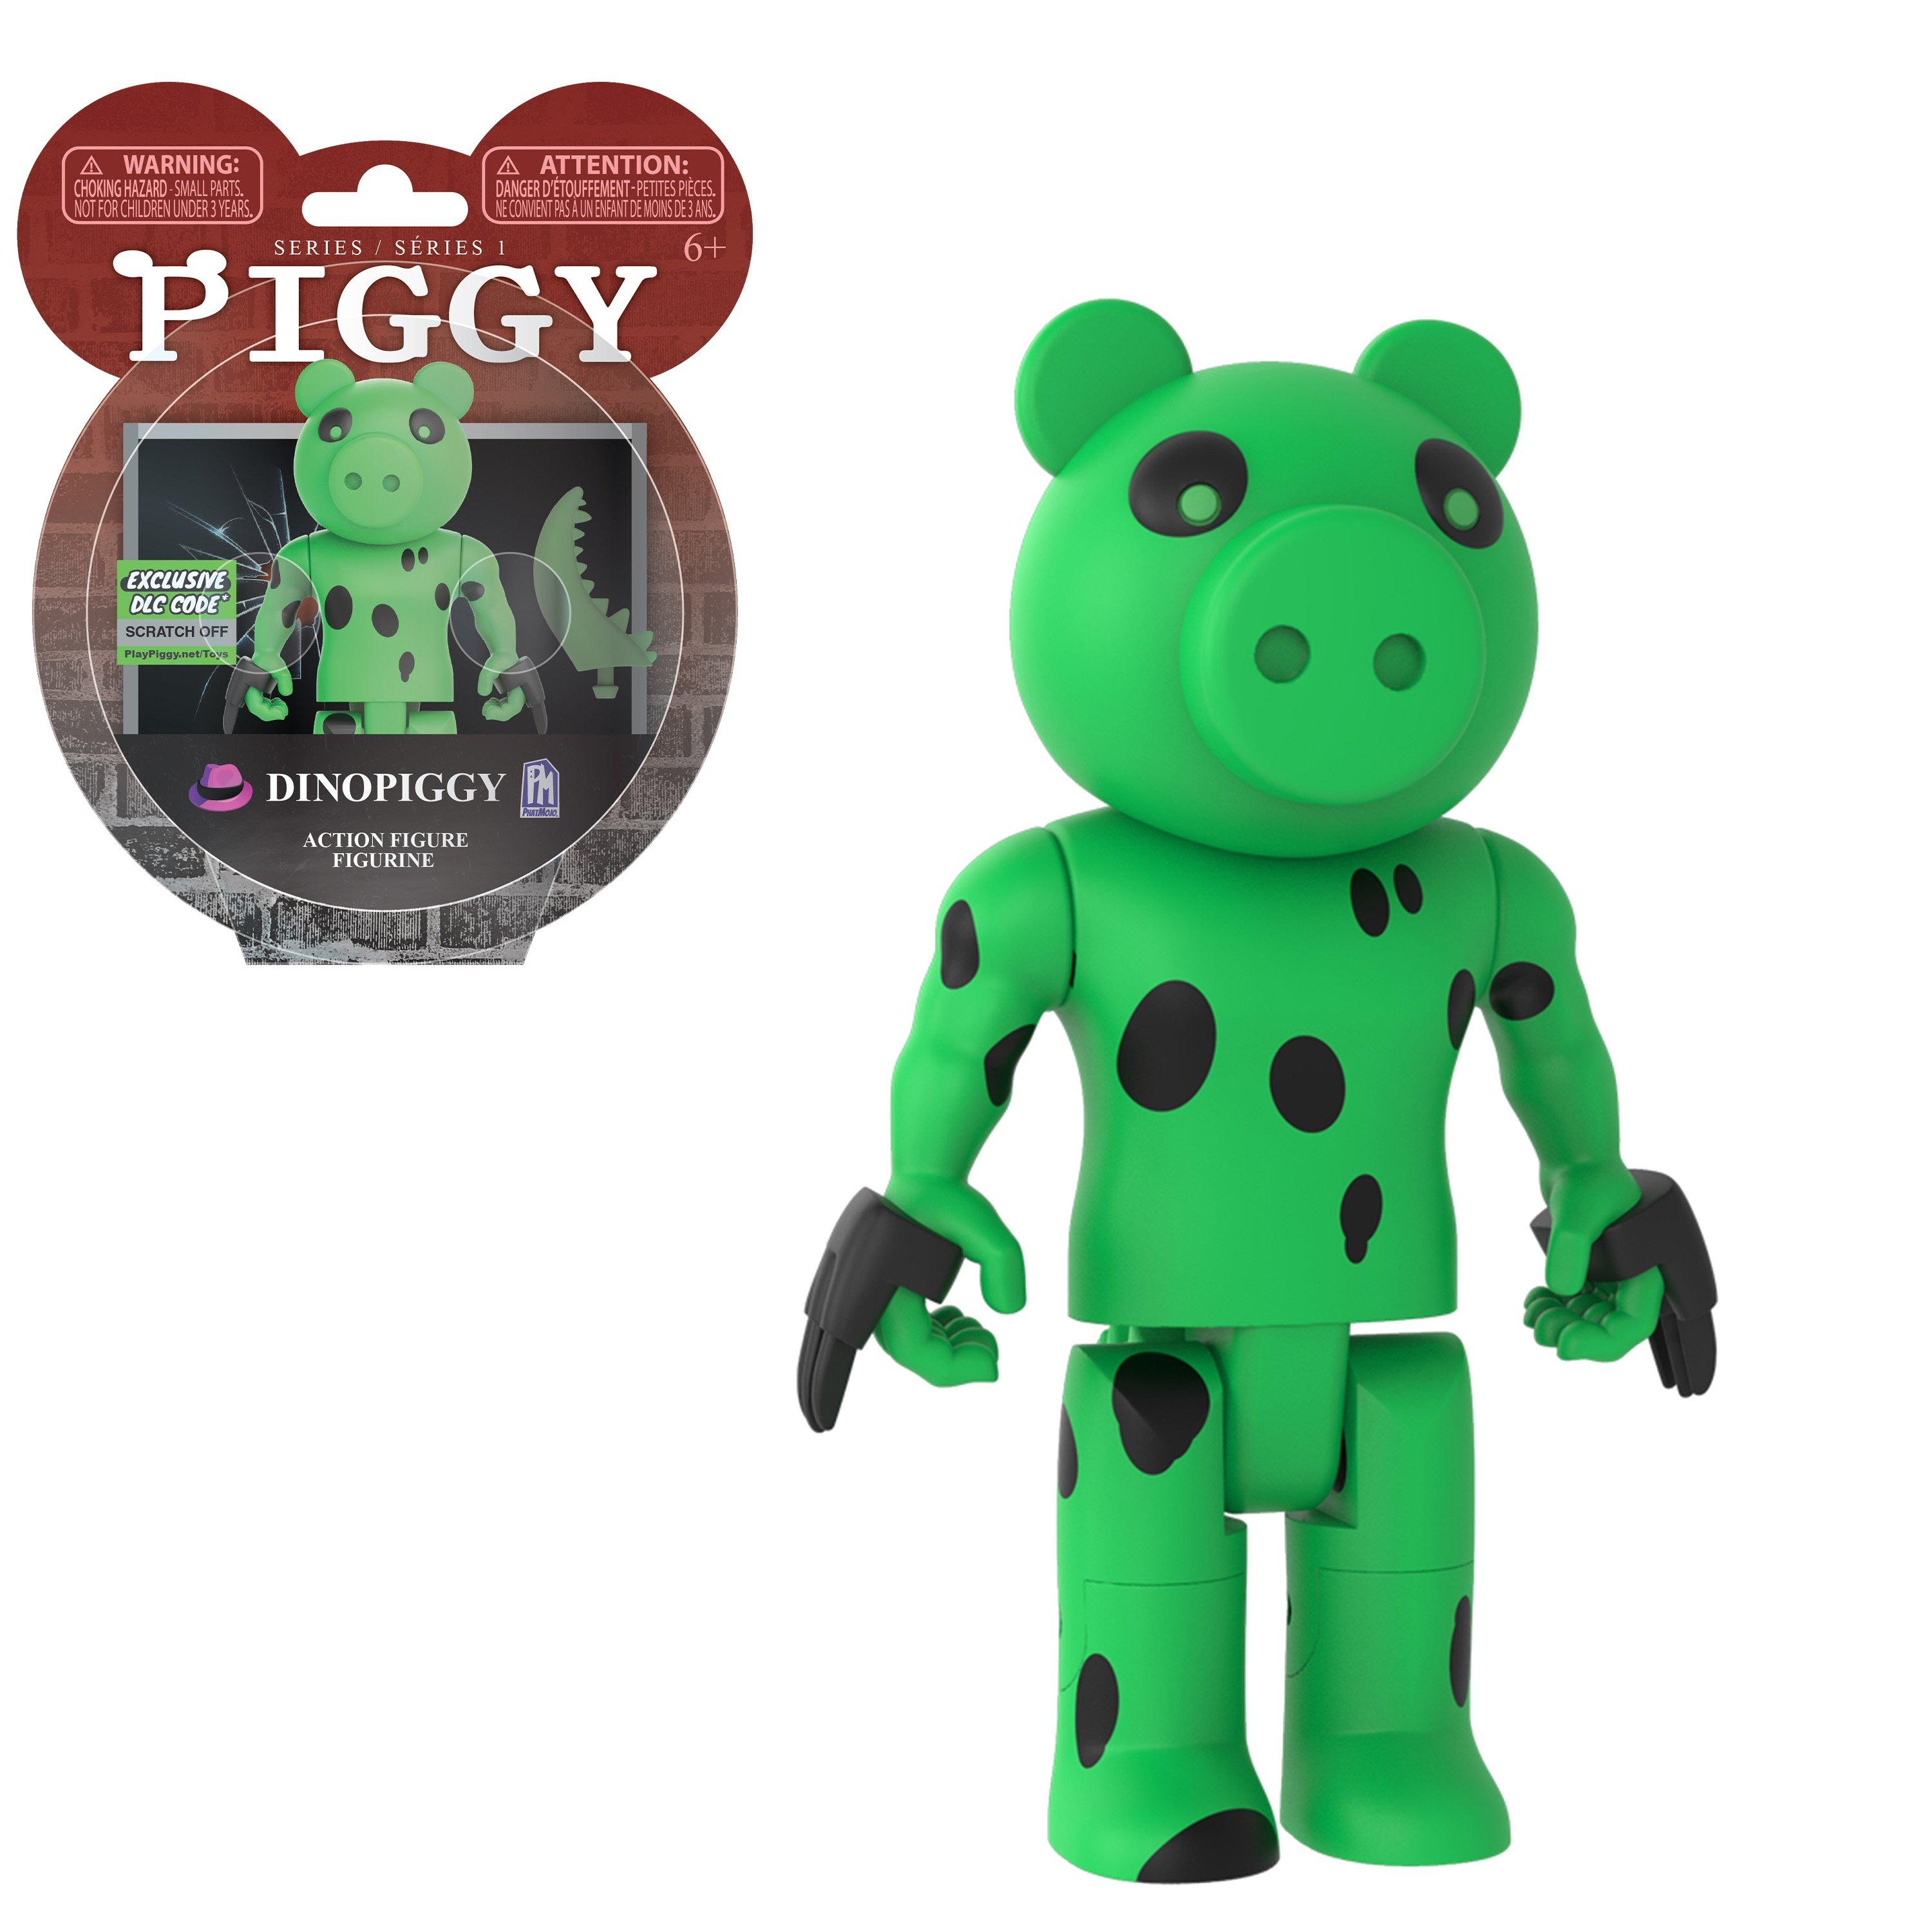 Piggy Dinopiggy Series 1 Action Figure Gamestop - roblox xbox gamestop